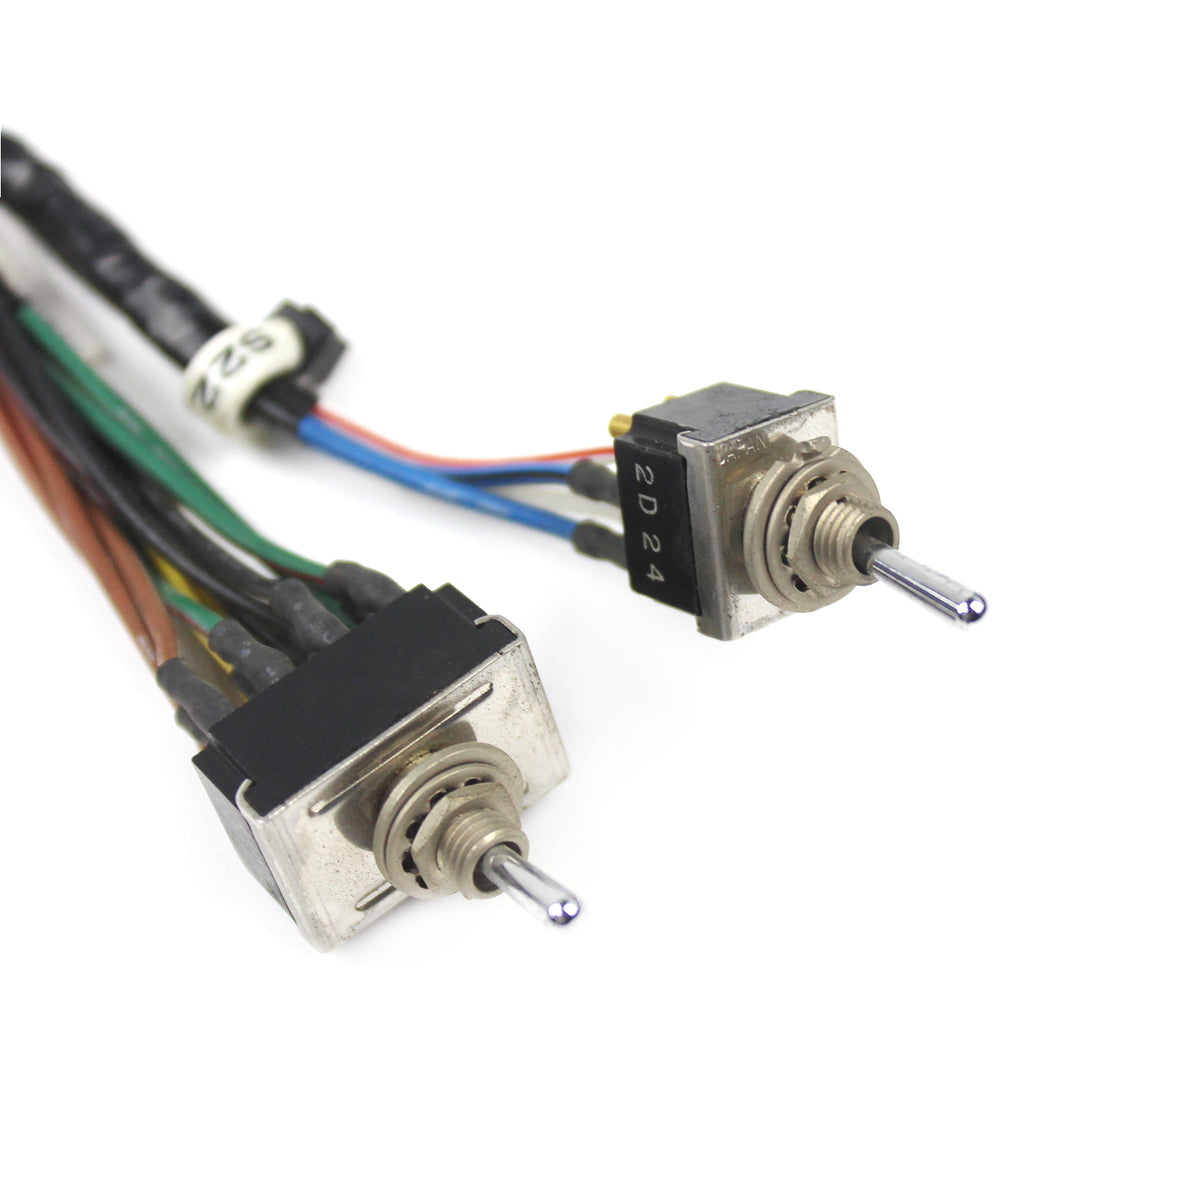 20Y-06-41150 Wiring harness for Komatsu PC300-8 PC350-8 PC400-8 PC200-8